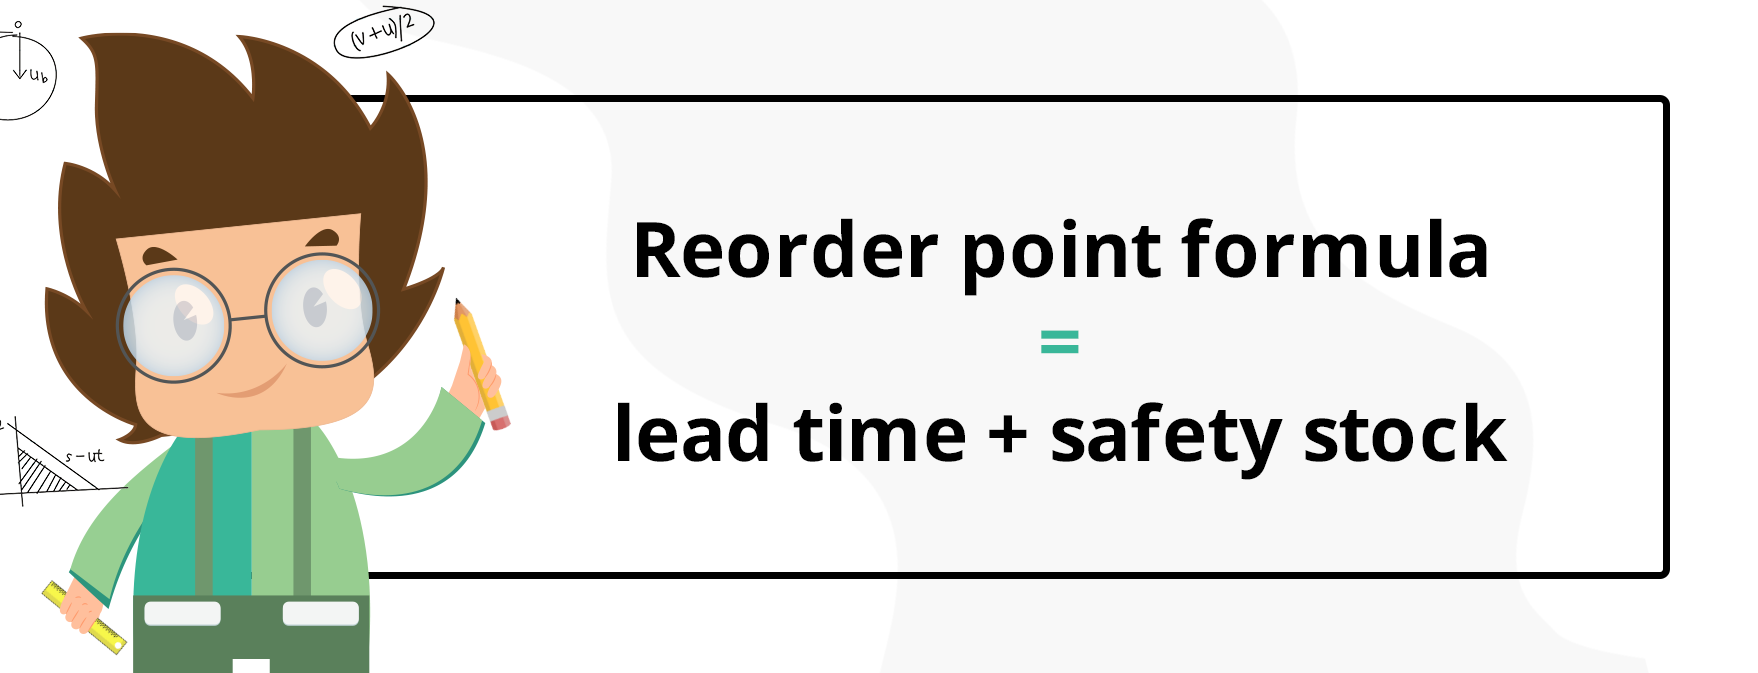 reorder point formula